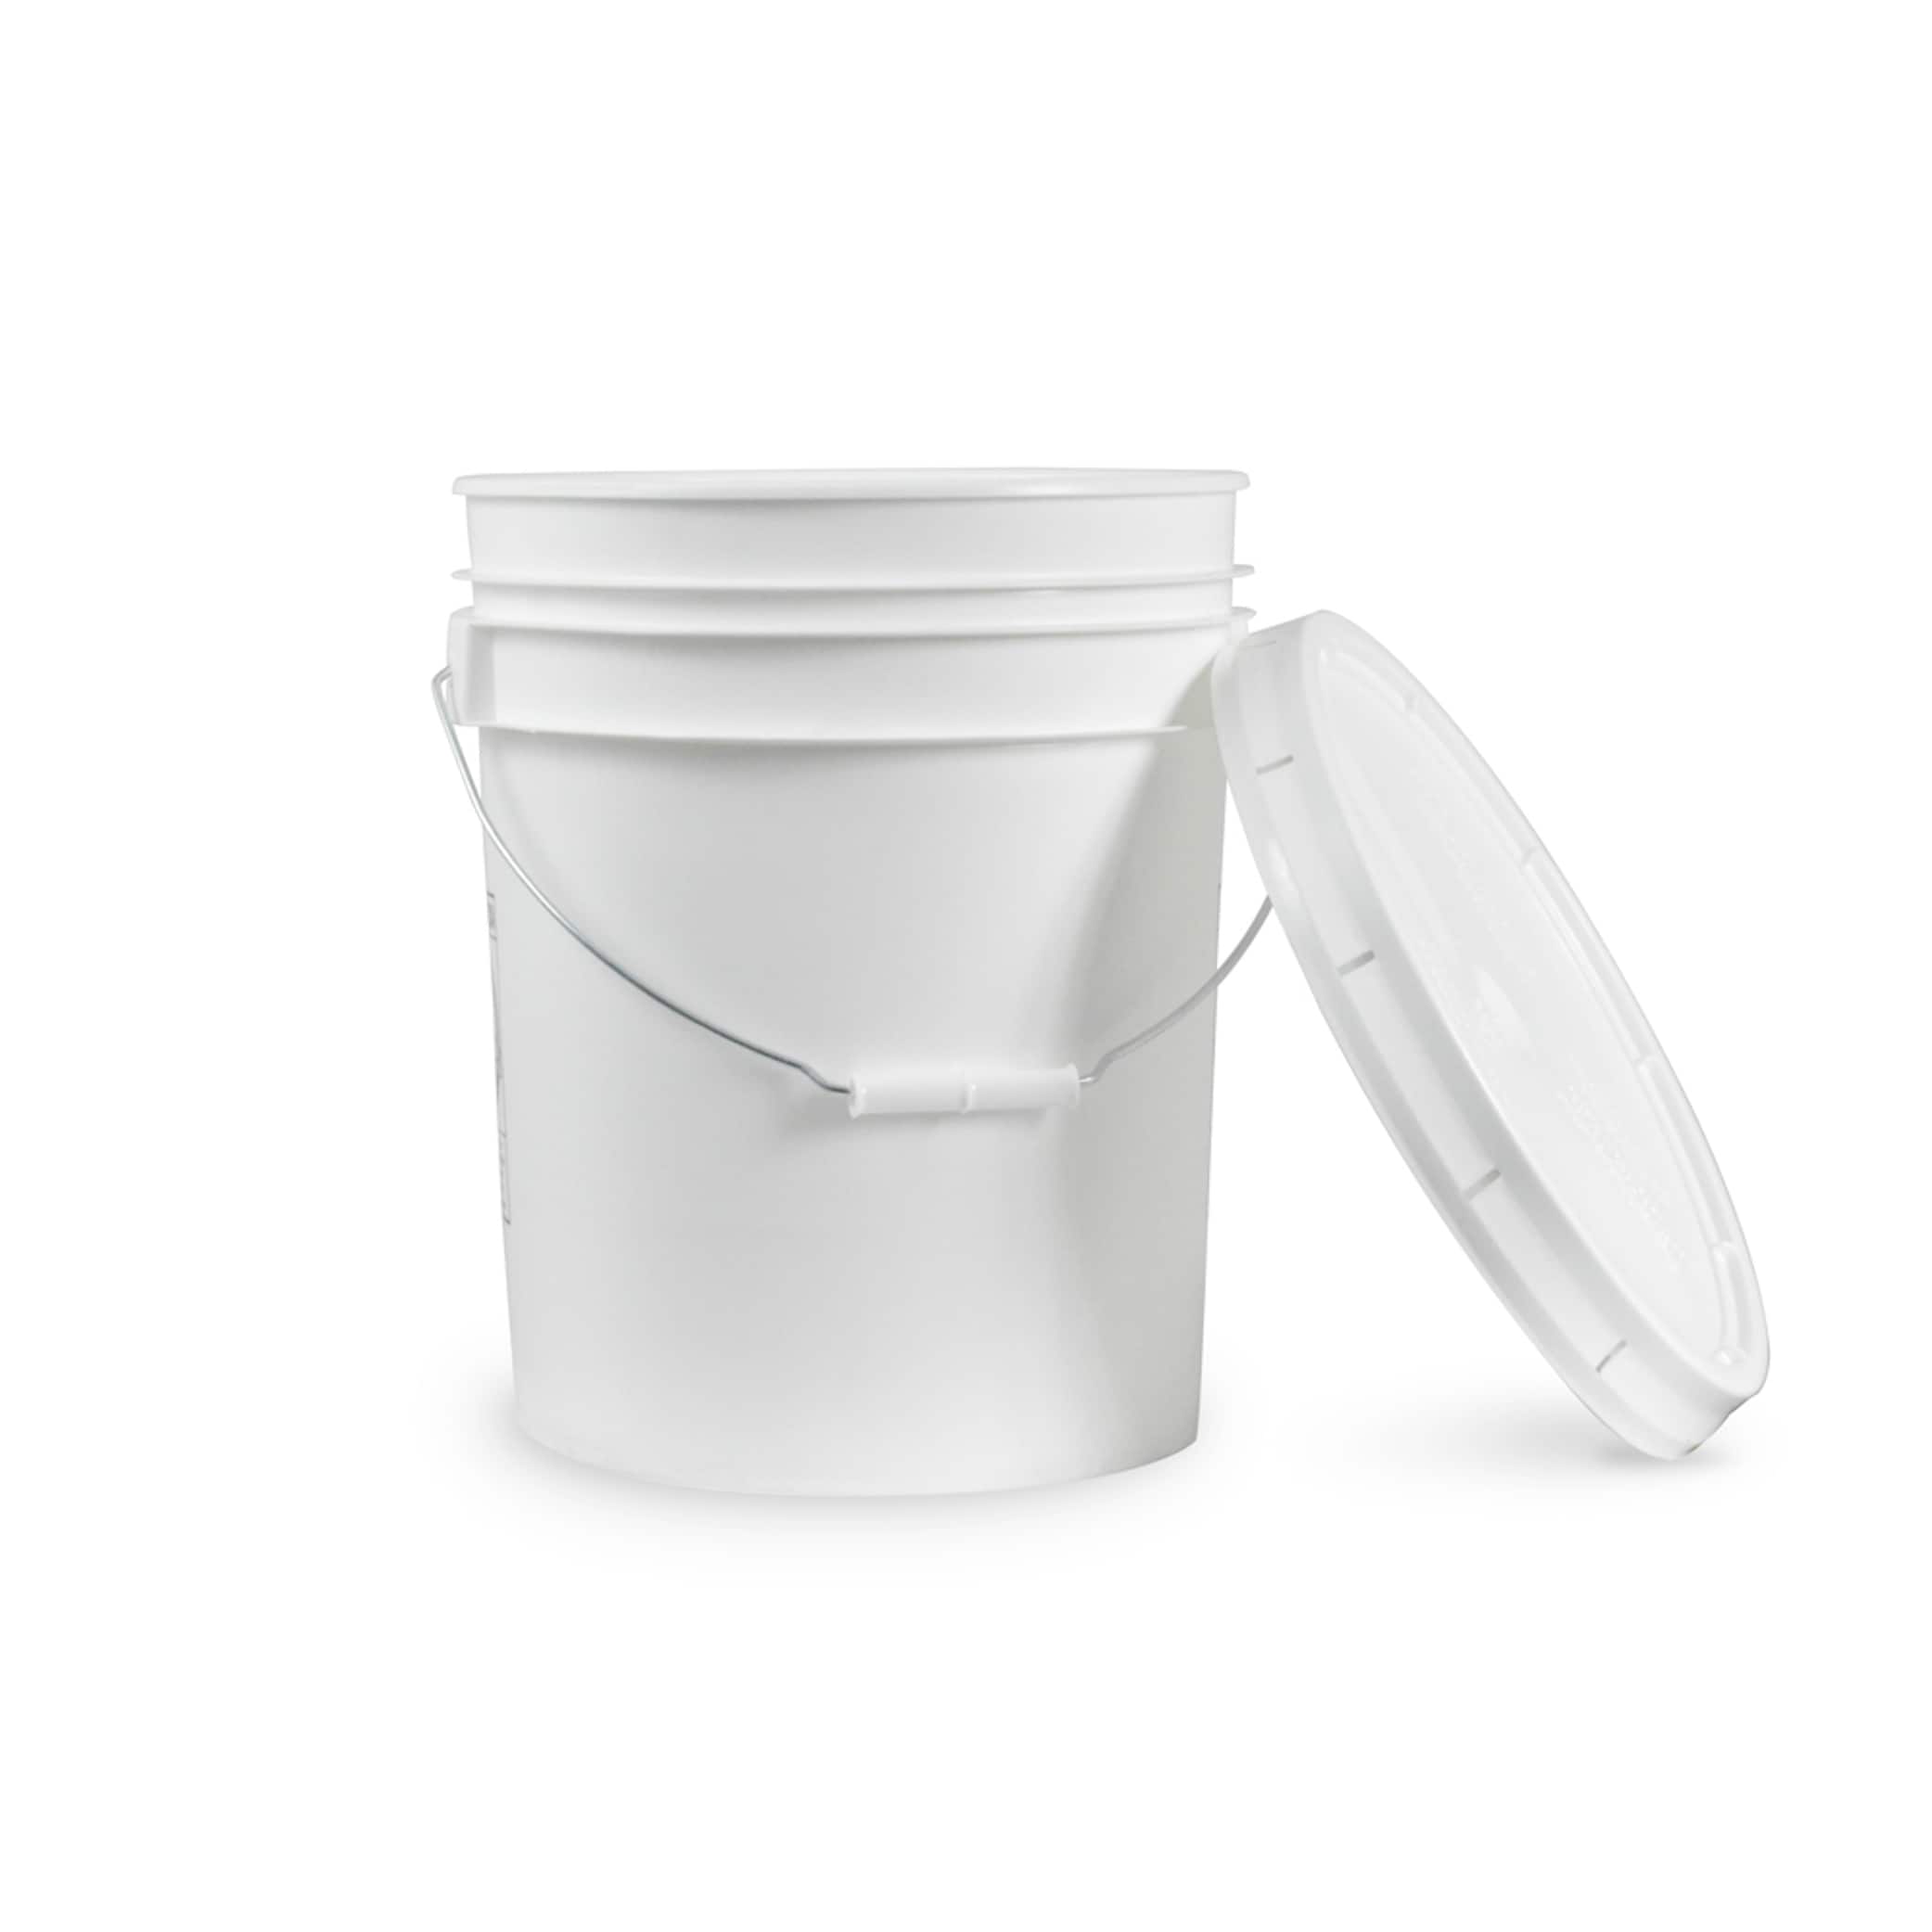 Plastic Bucket Vector Illustration Of 3d Realistic Plastic